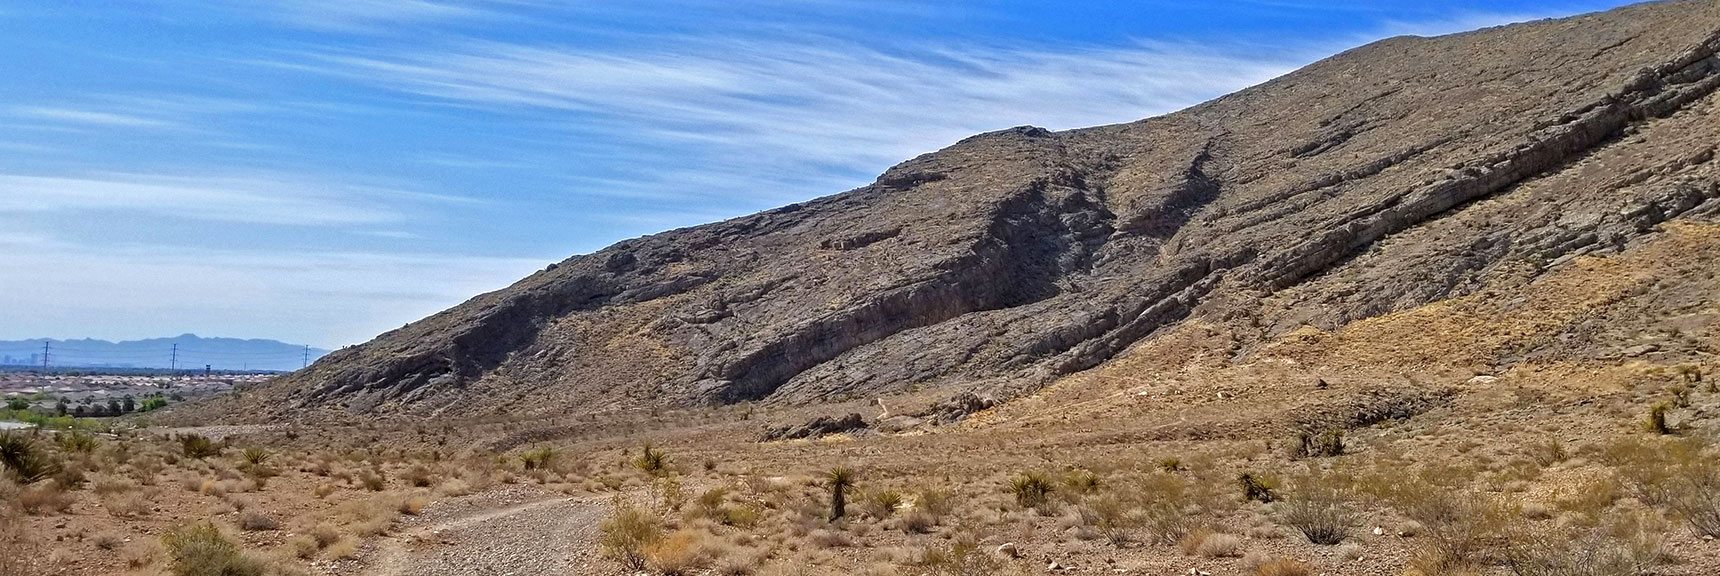 Eastern Views of Cheyenne Mt Summit Ridge from the Toove Trail Along Ridge Base | Cheyenne Mountain | Las Vegas, Nevada